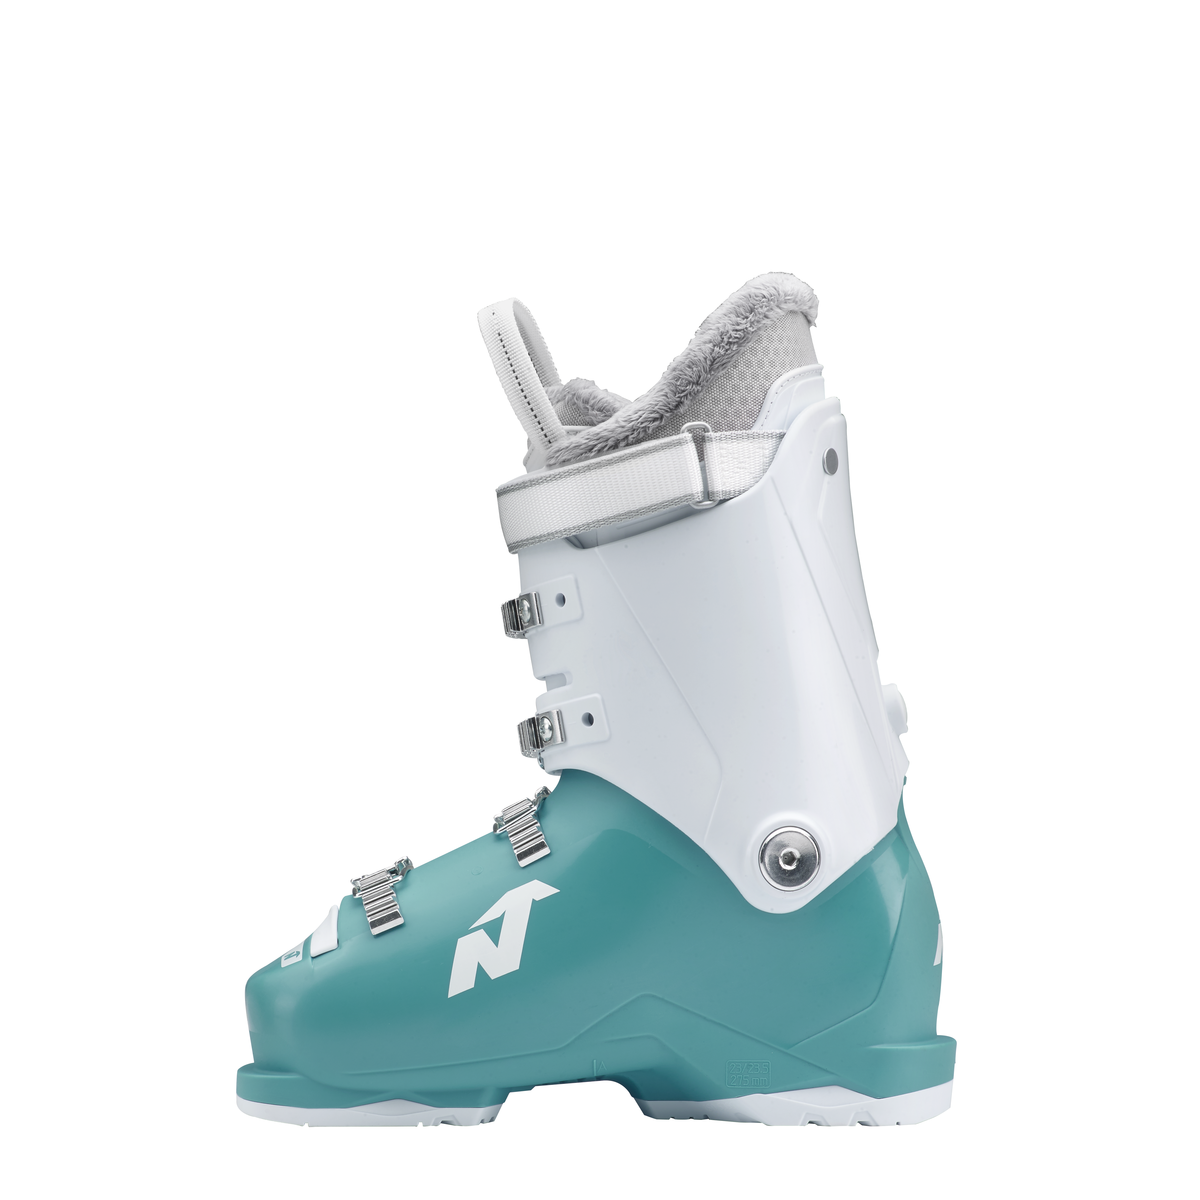 Lyžařské boty Nordica SPEEDMACHINE J 4 GIRL - 220, blue/white/pink